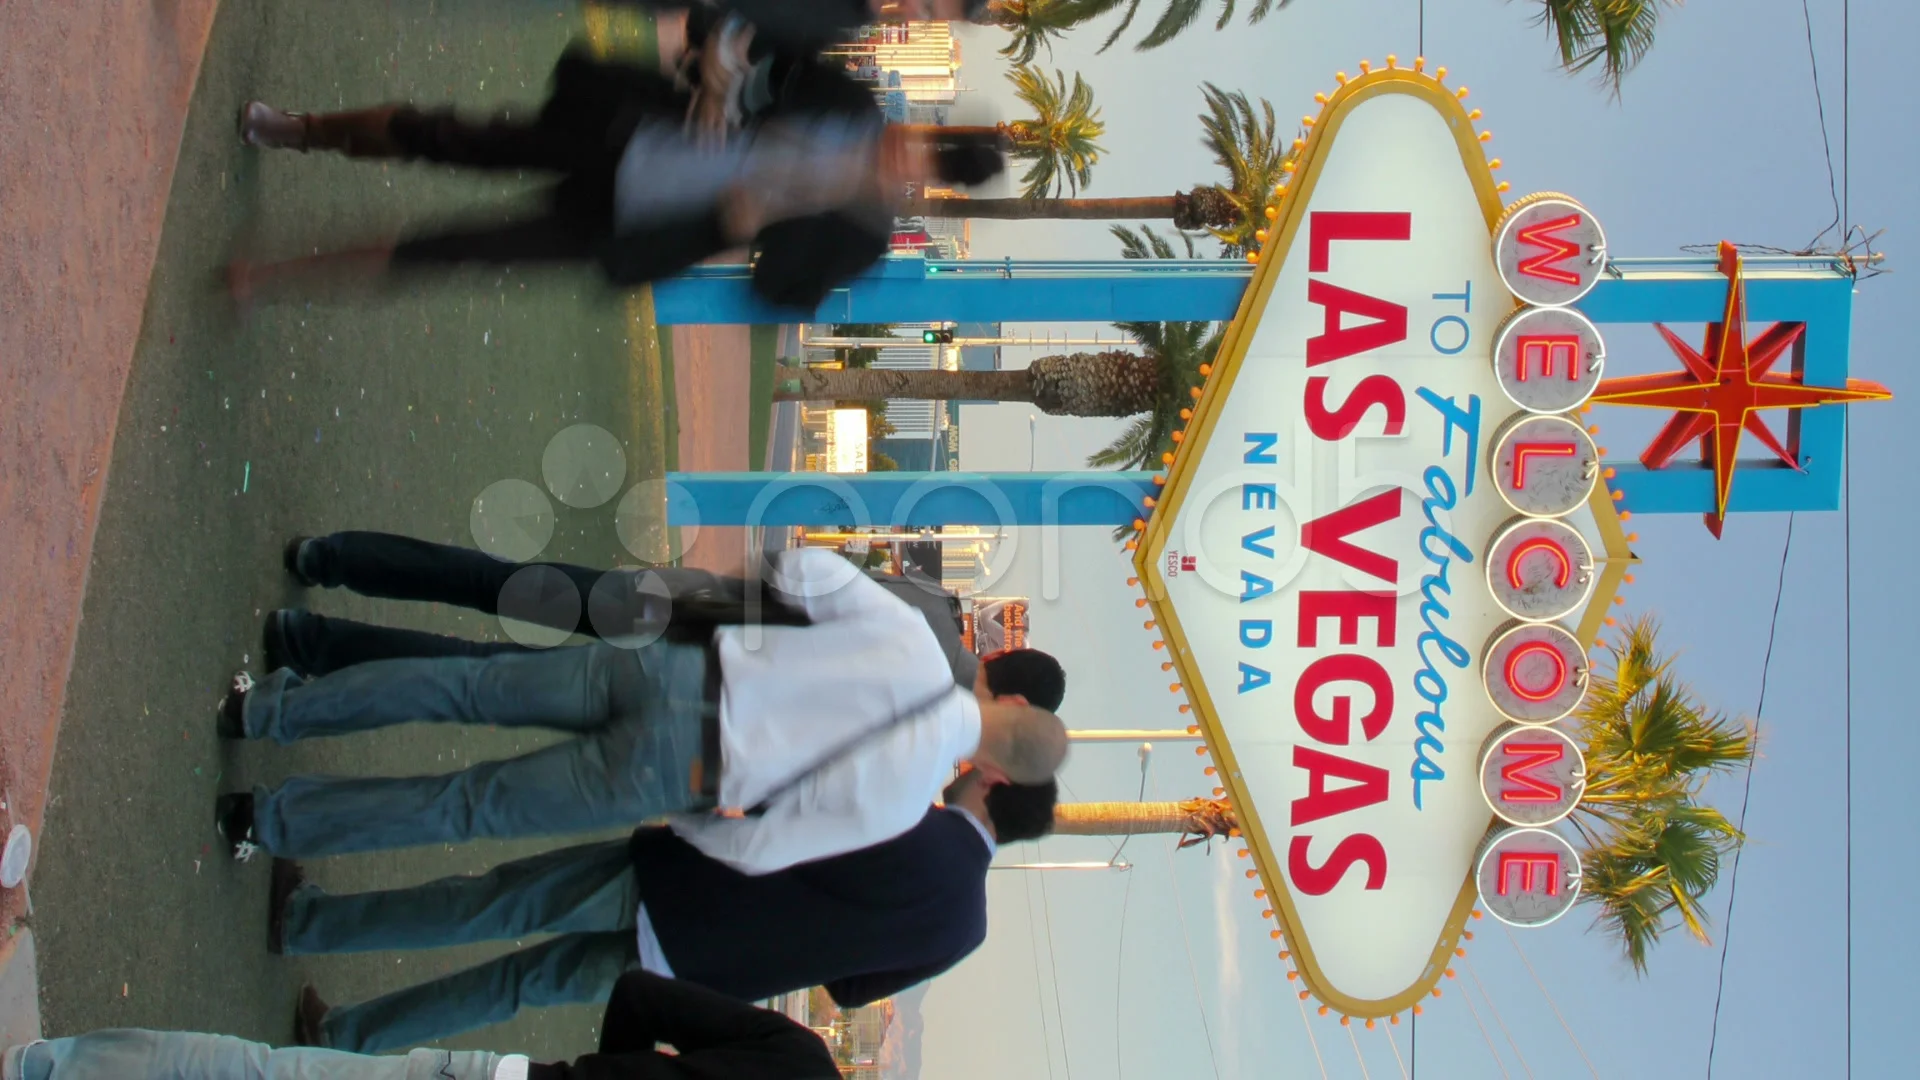 Las Vegas Blvd Sign - Stock Video Footage - Dissolve